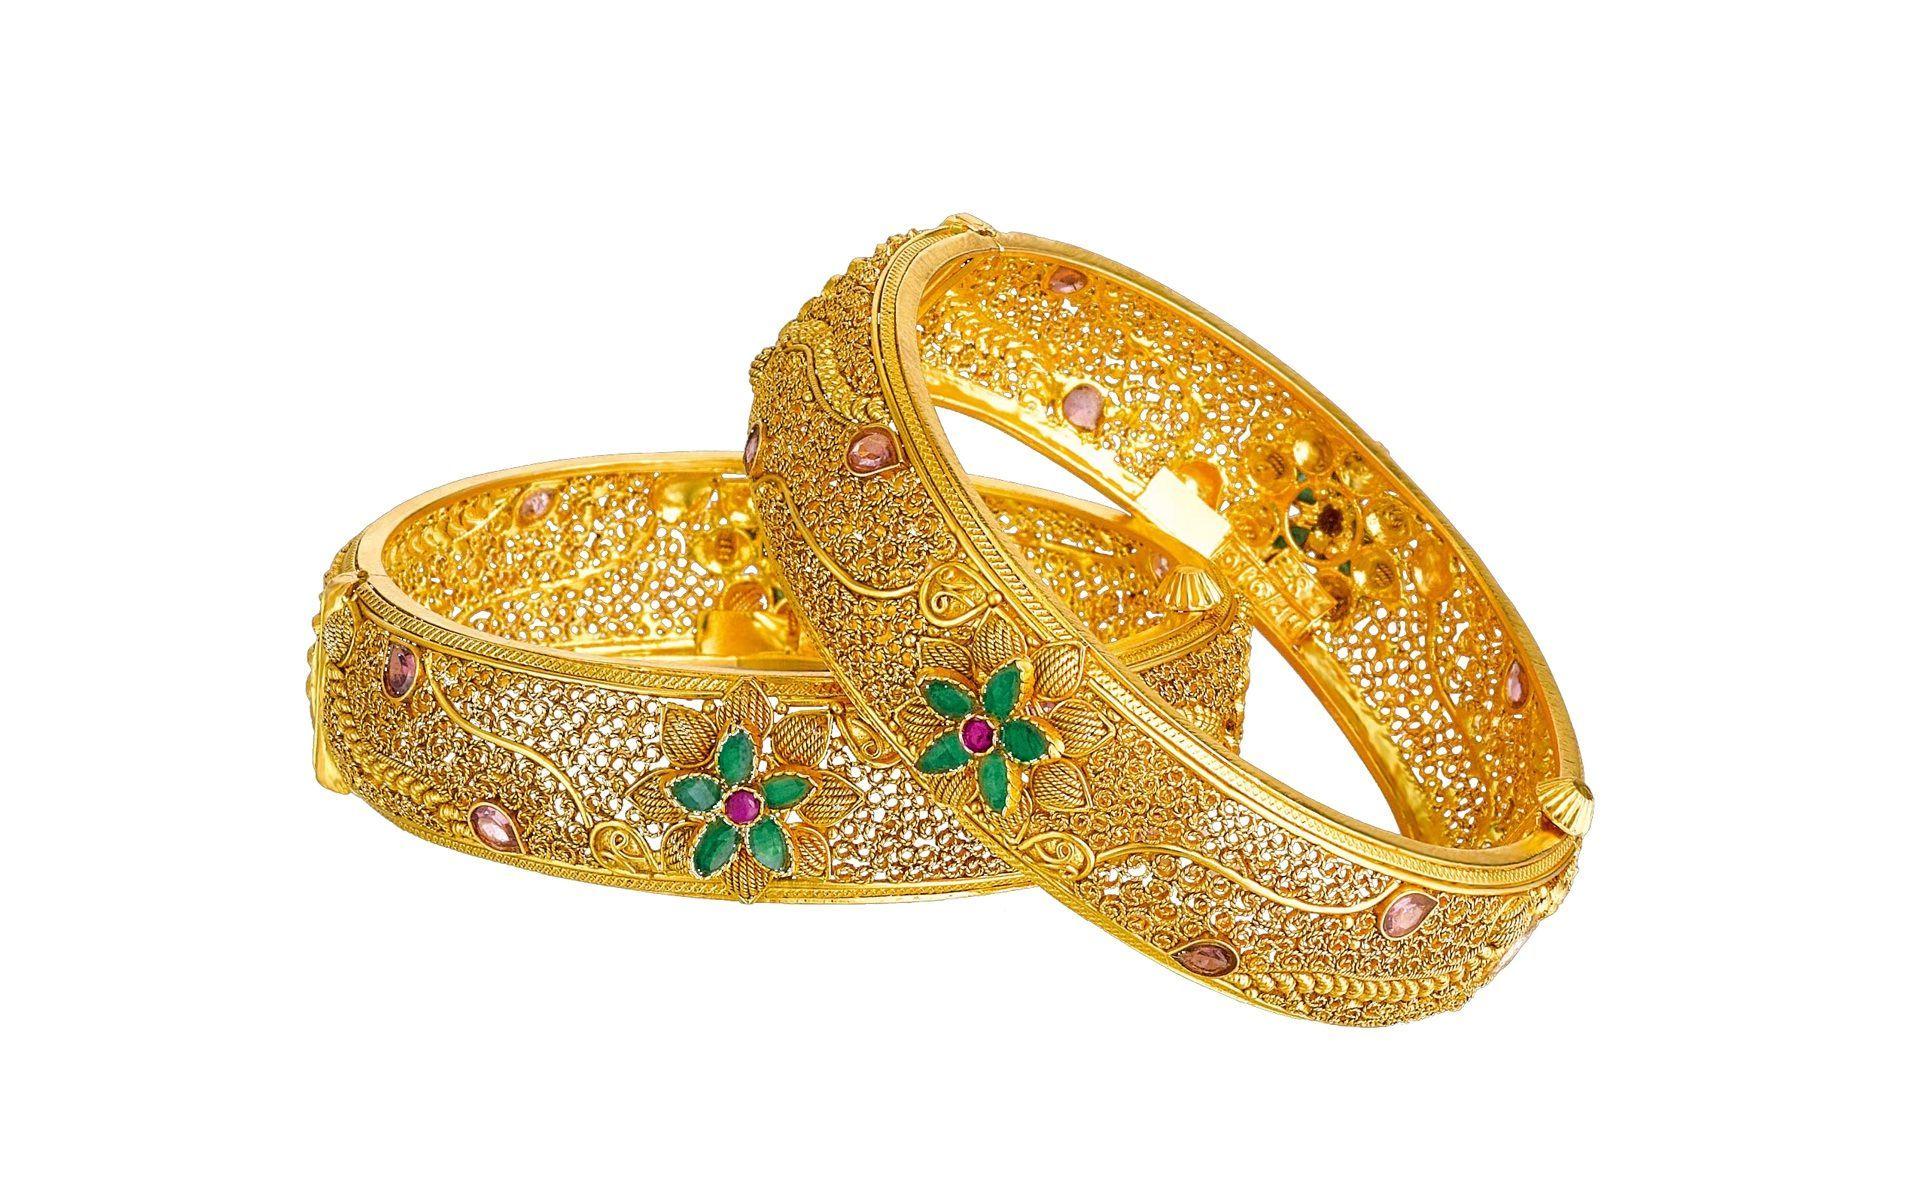 gold jewellery bangles design, Buy gold jewelry, Bangles jewelry designs